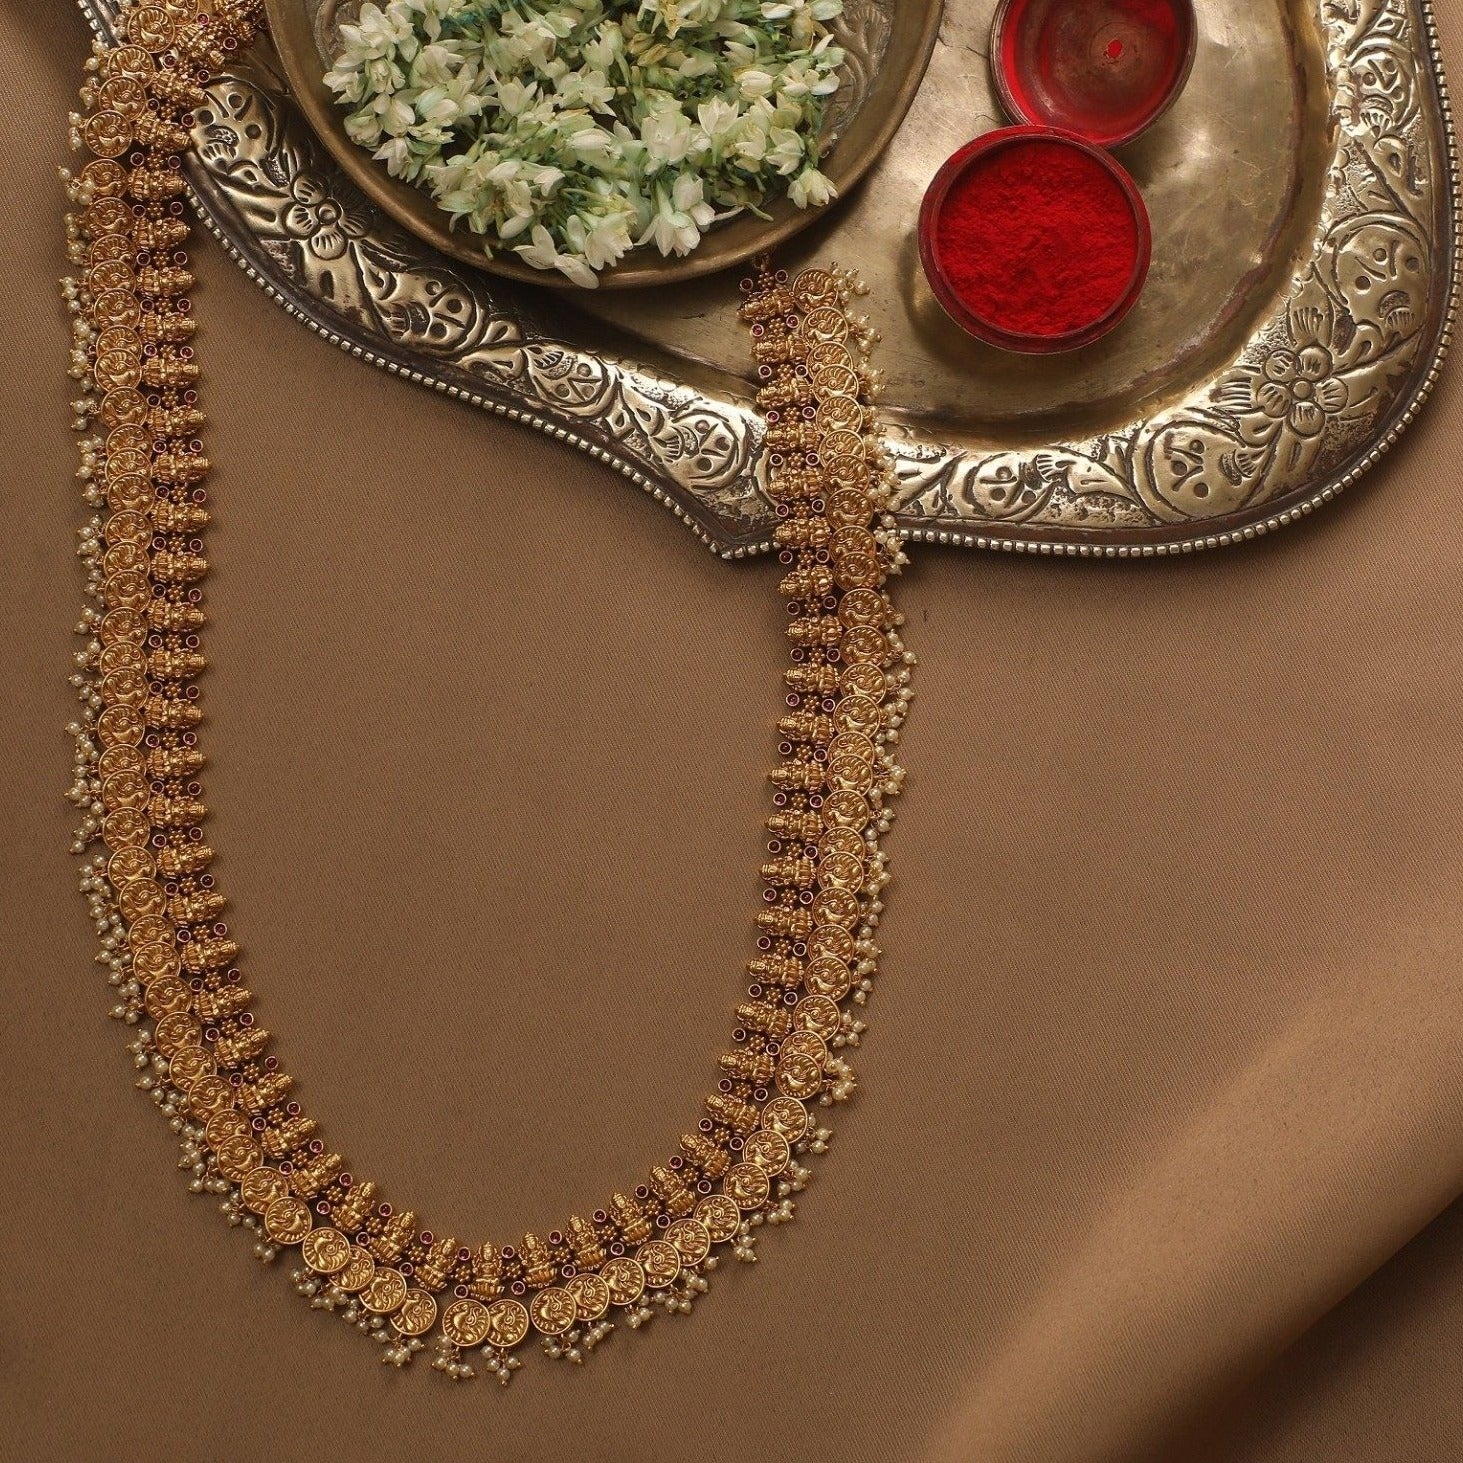 Hiranmayi Antique Nakshi Silver Necklace